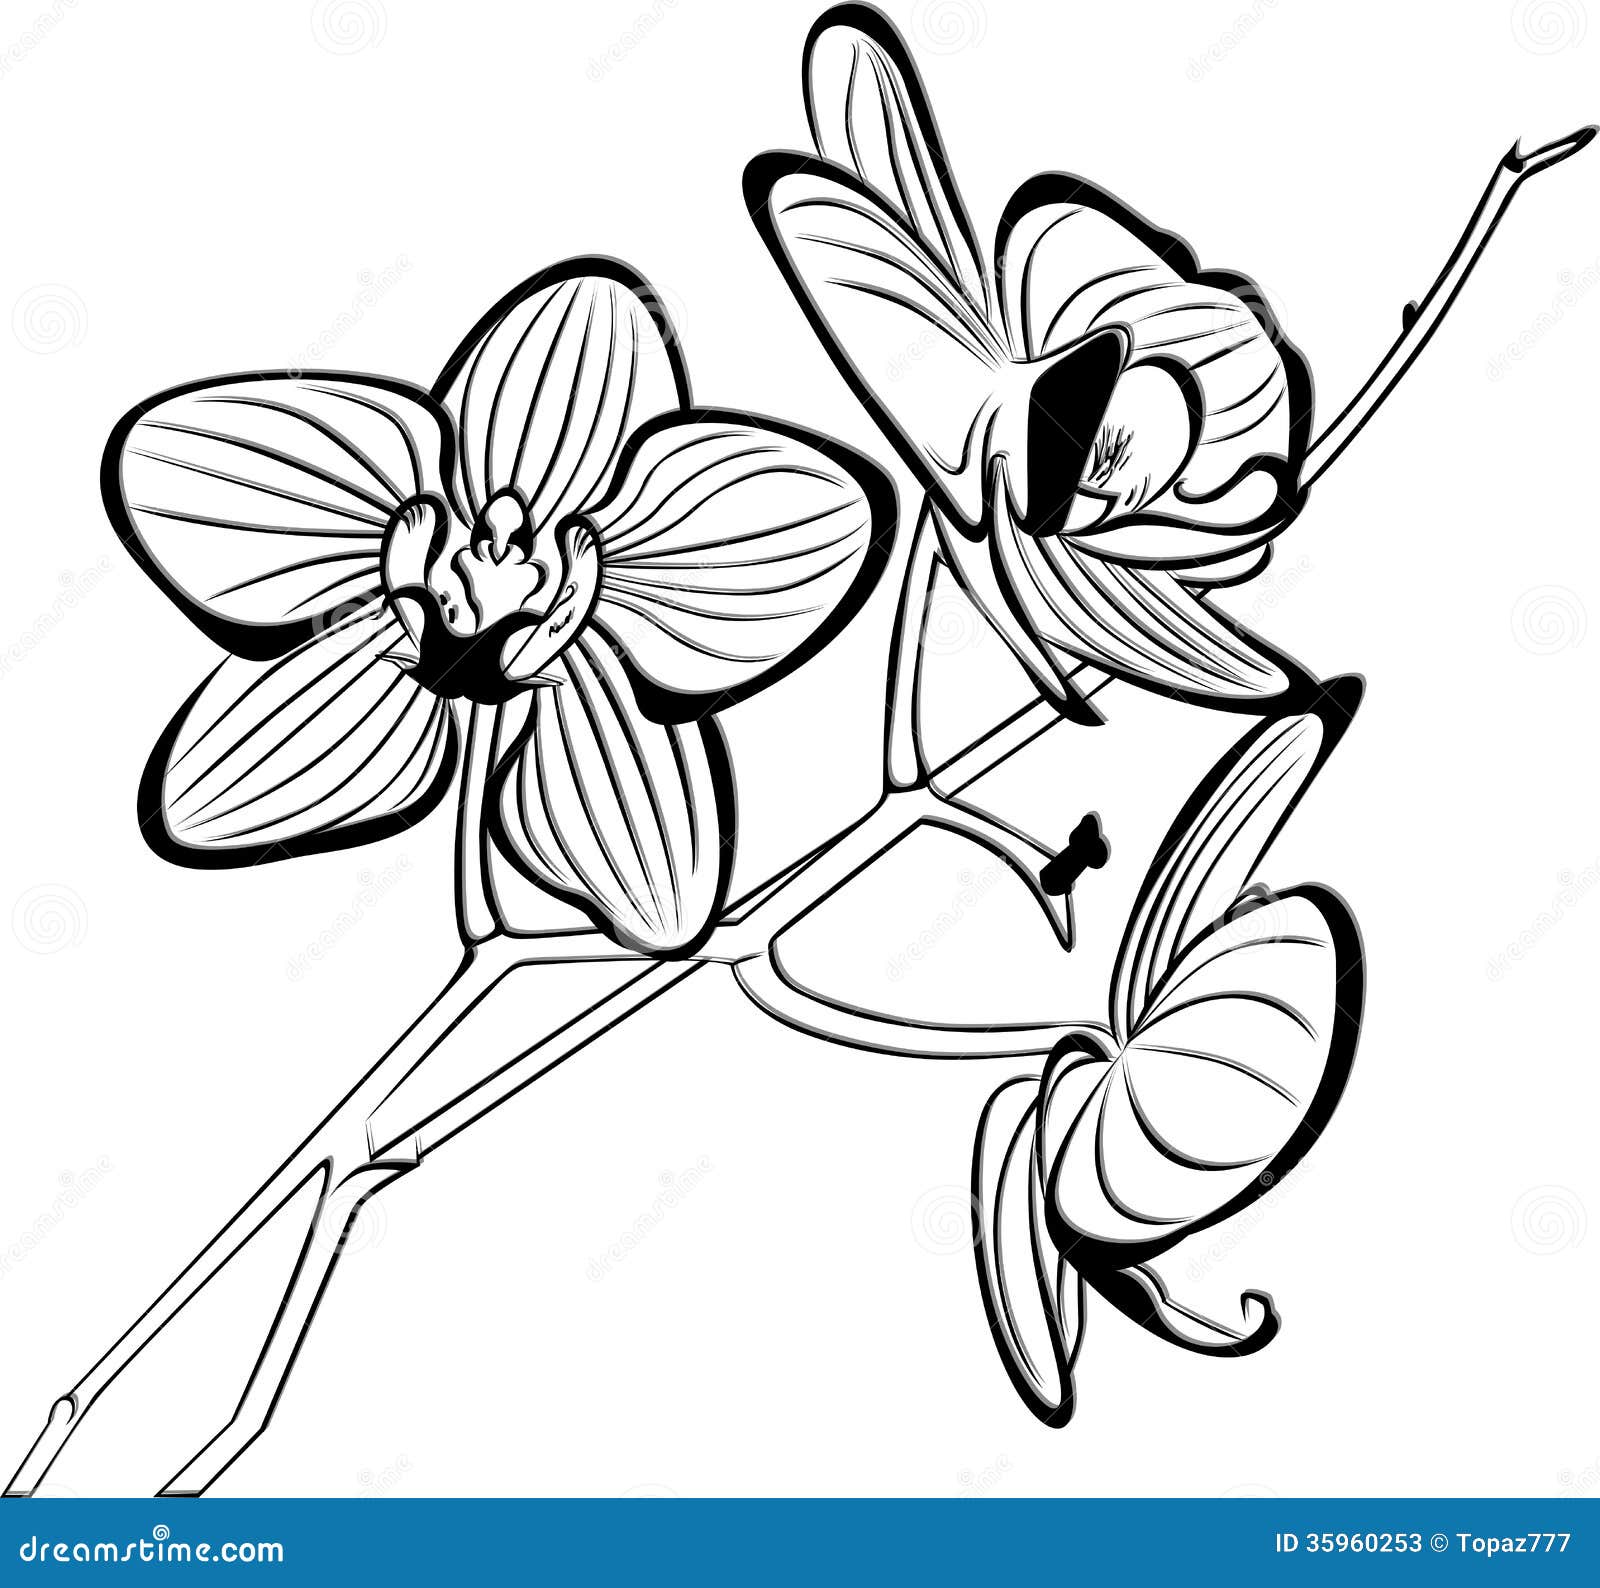 Image for doodle art flora